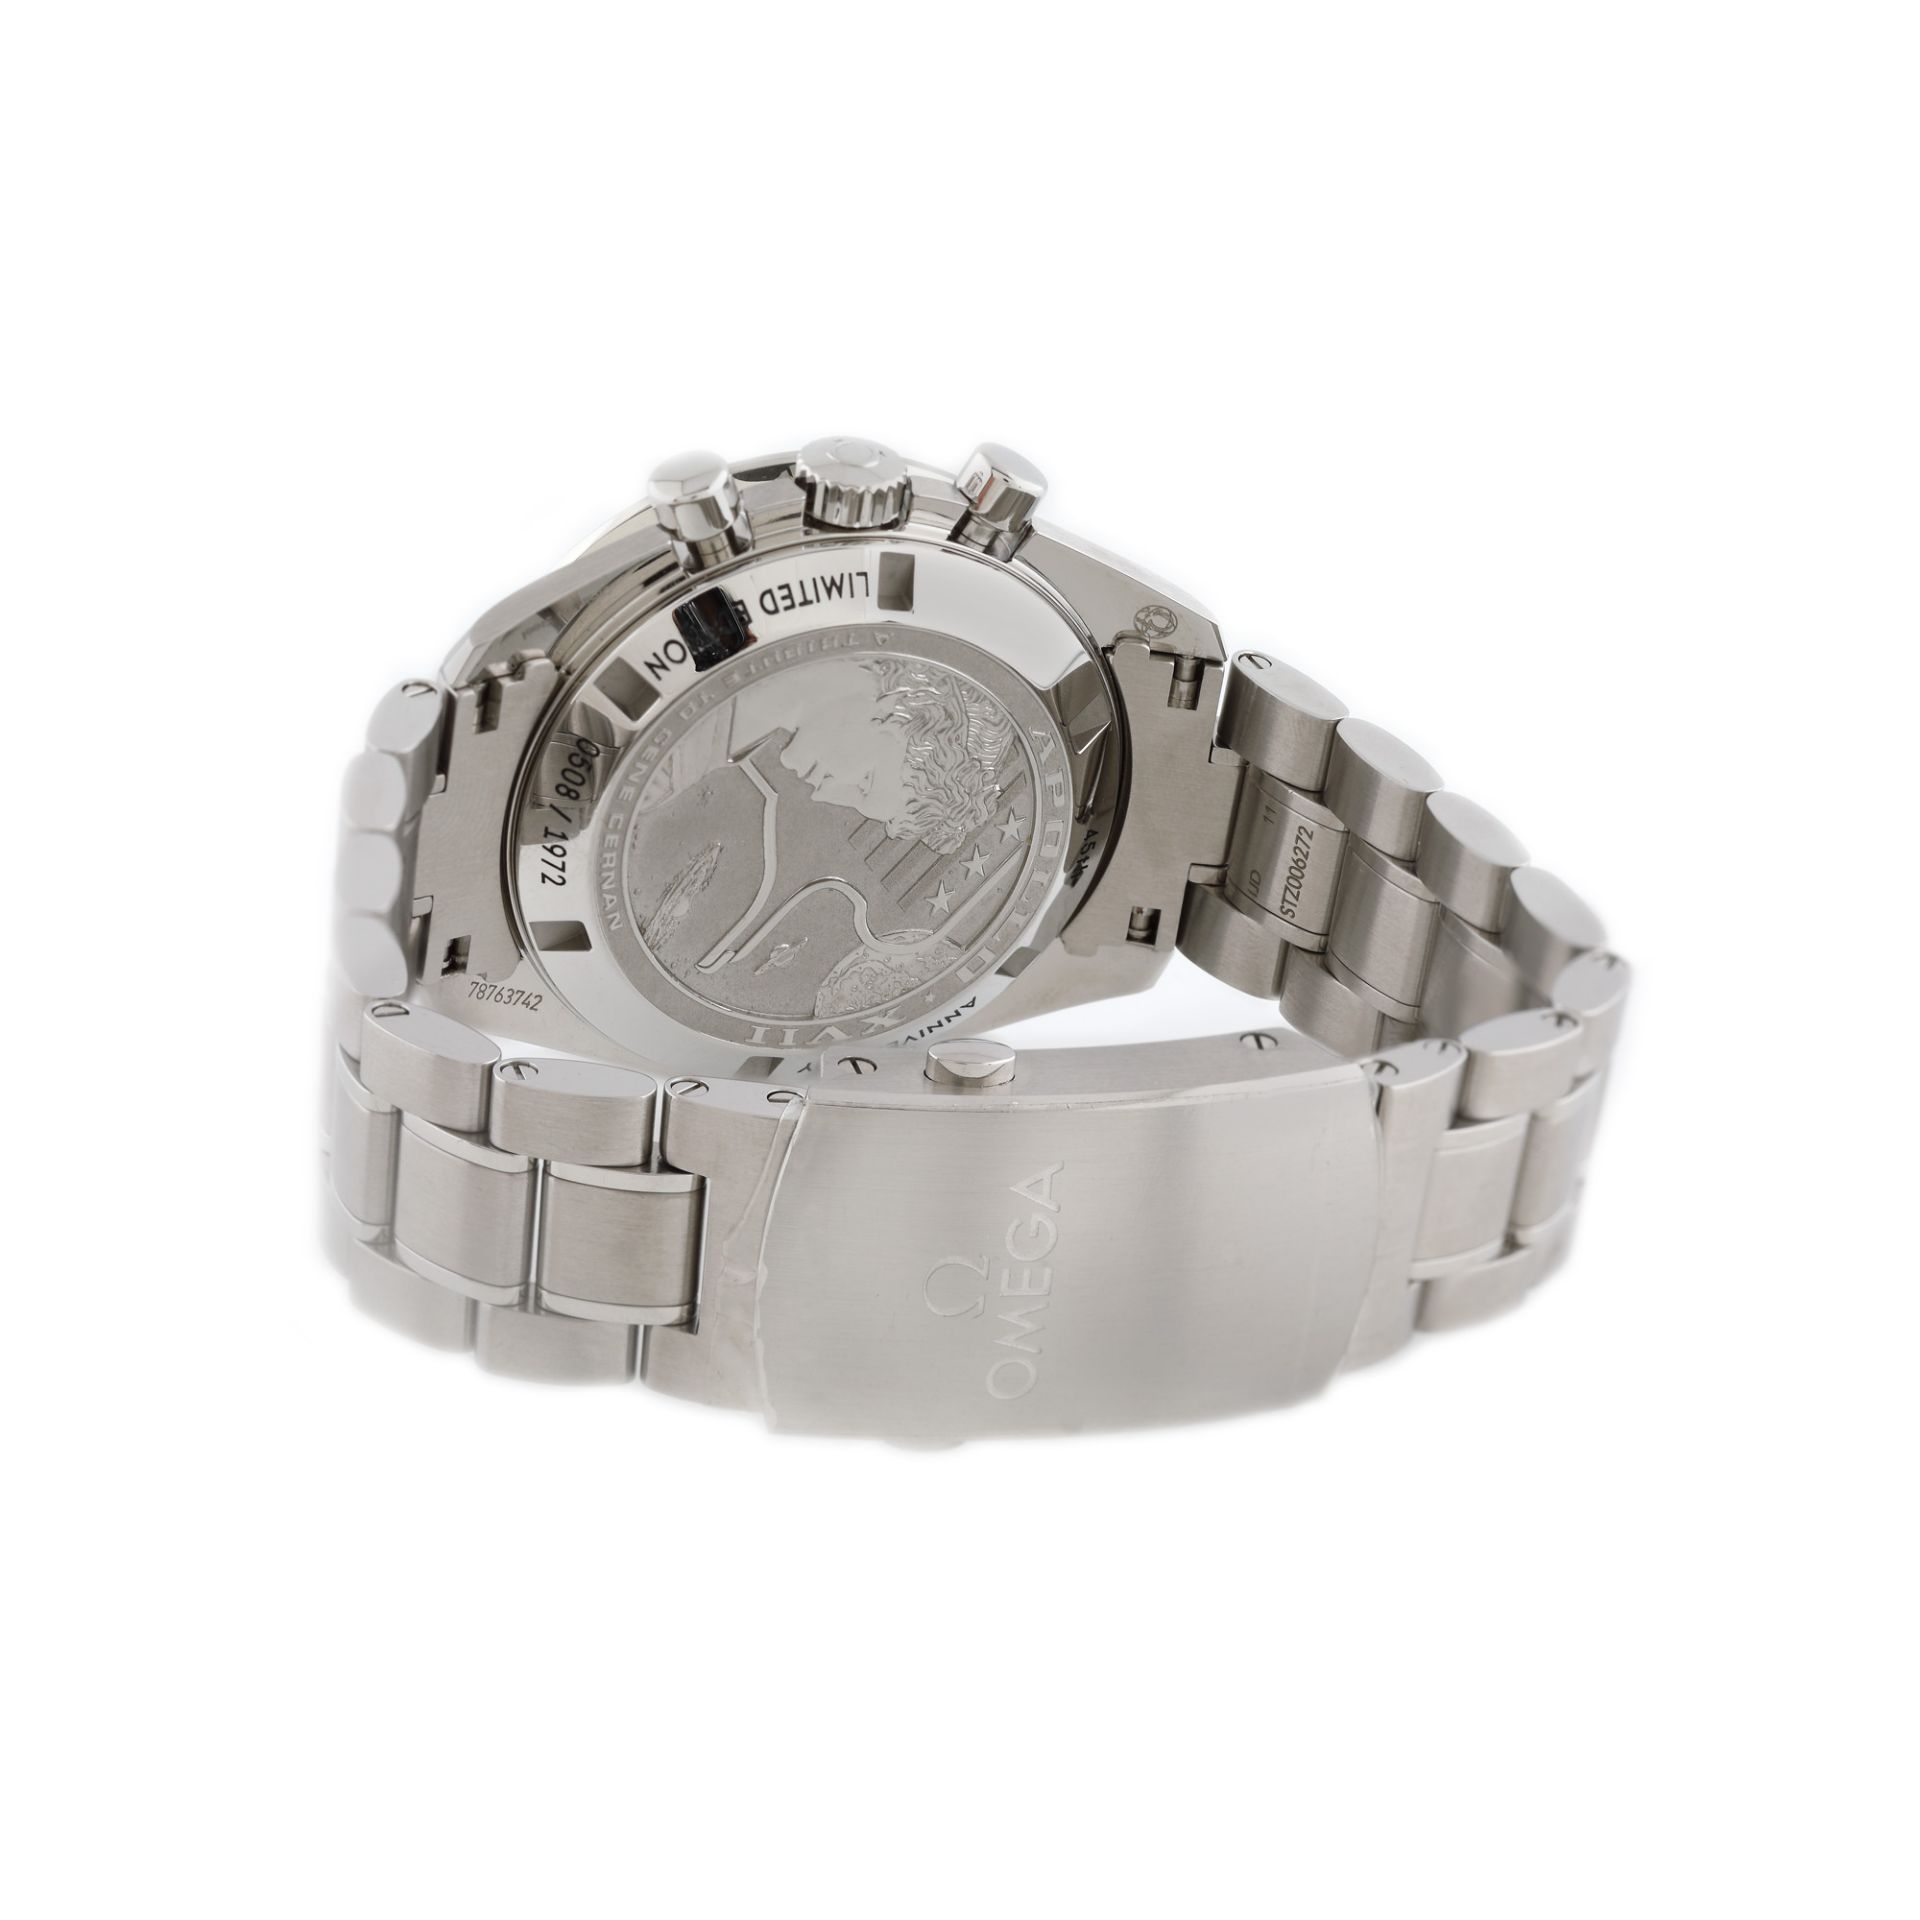 Omega Speedmaster Moonwatch "Apollo XVII" wristwatch, men, limited edition 508/1972, provenance doc - Image 2 of 2